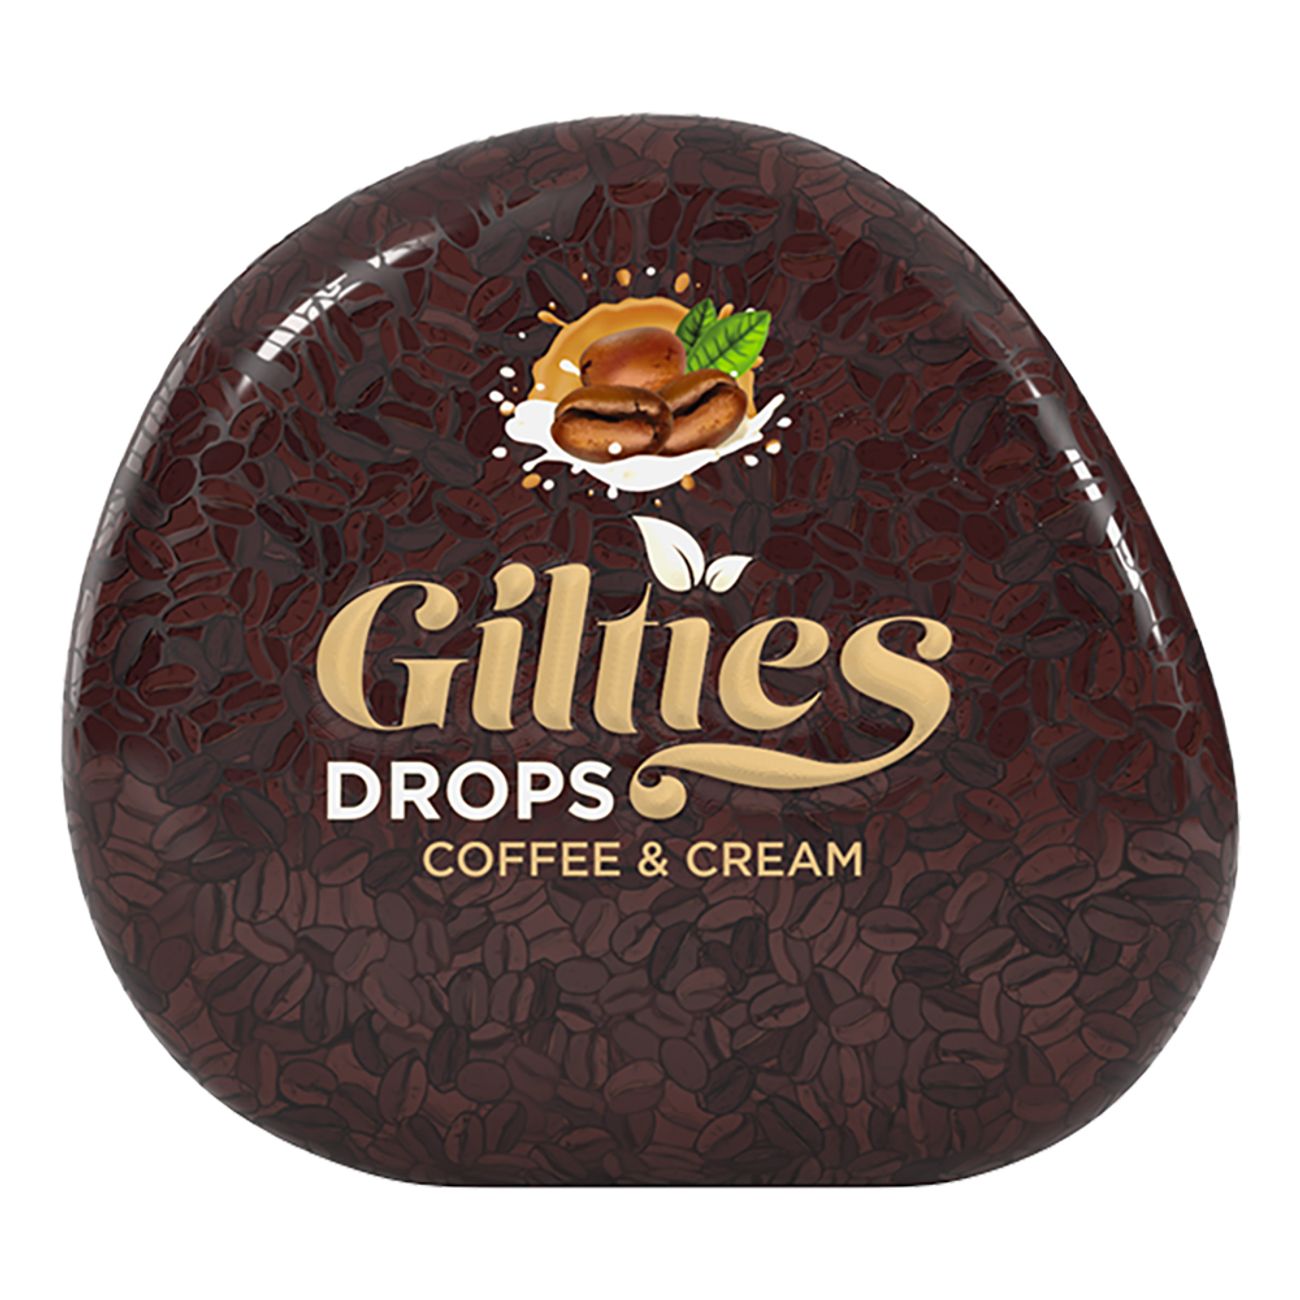 gilties-drops-coffee-cream-86565-1